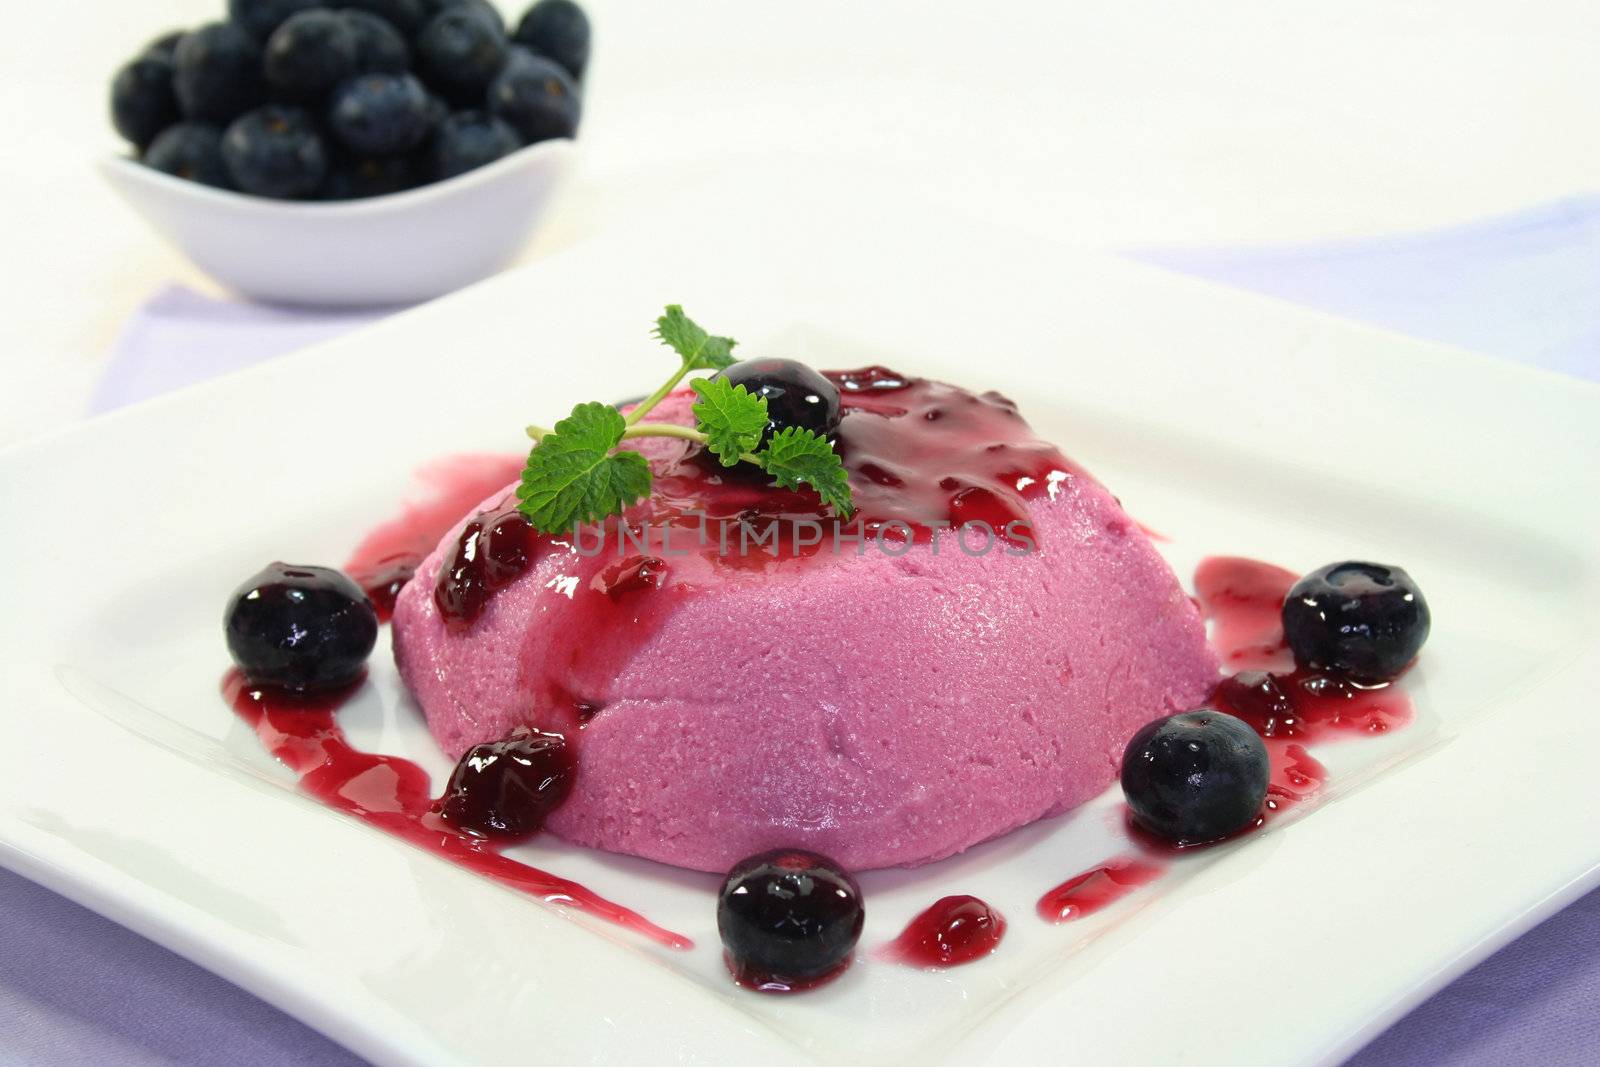 Blueberry dessert by silencefoto